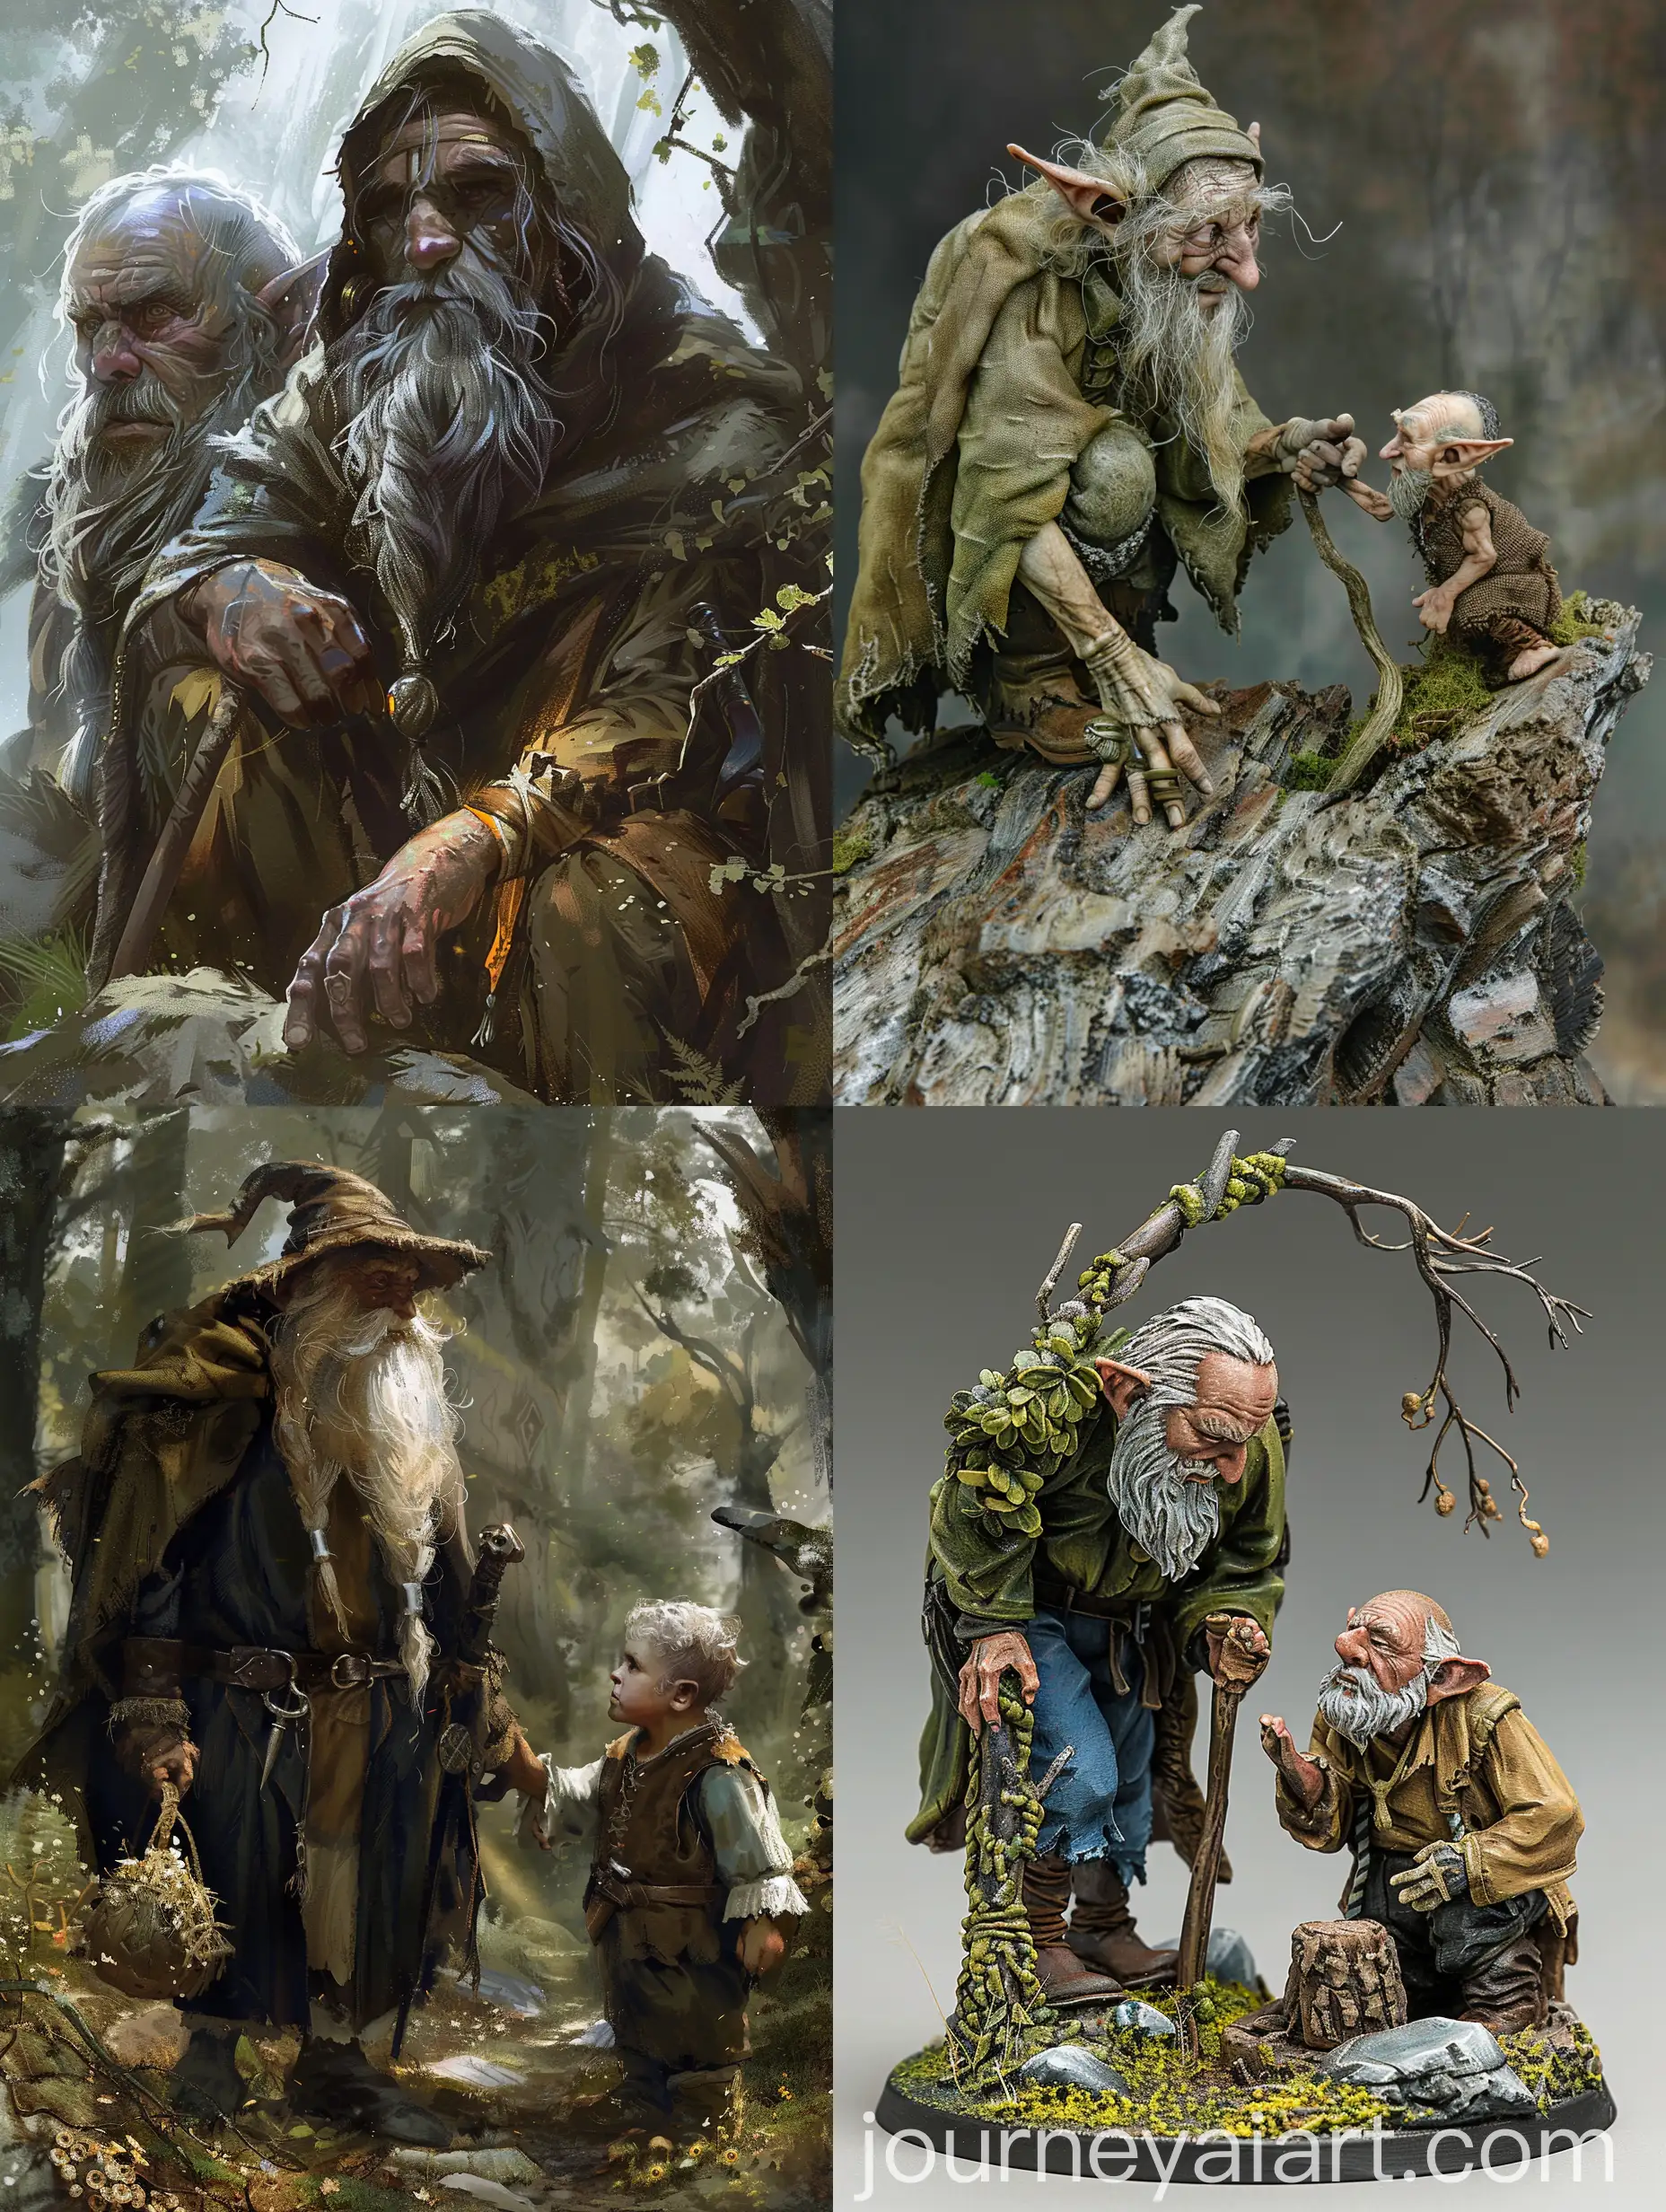 Elf-Hermit-Assisting-Dwarf-in-Forest-Scene